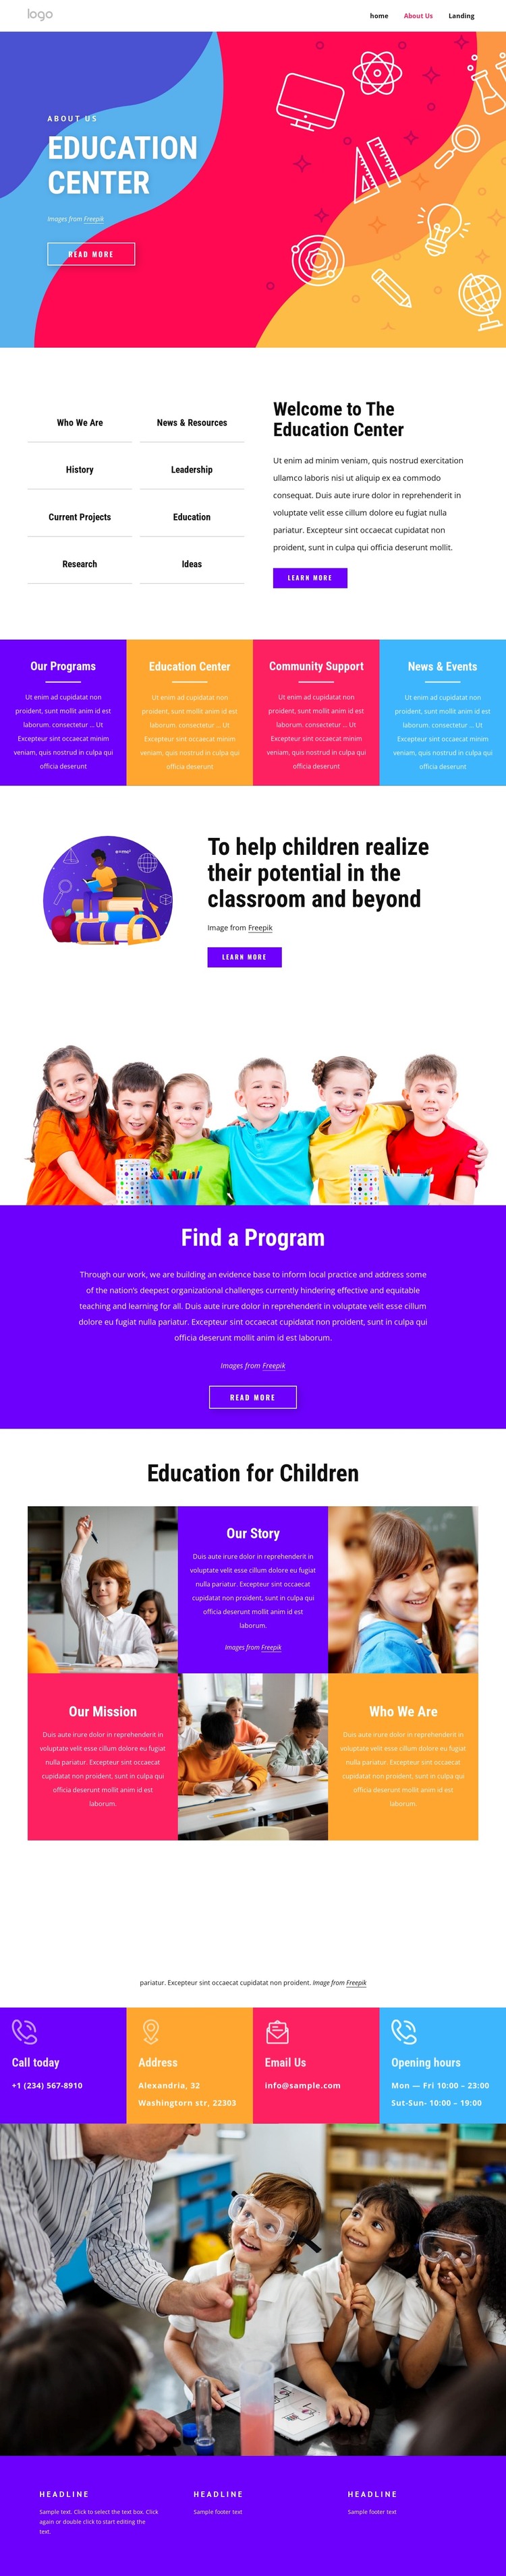 Family and education center WordPress Theme